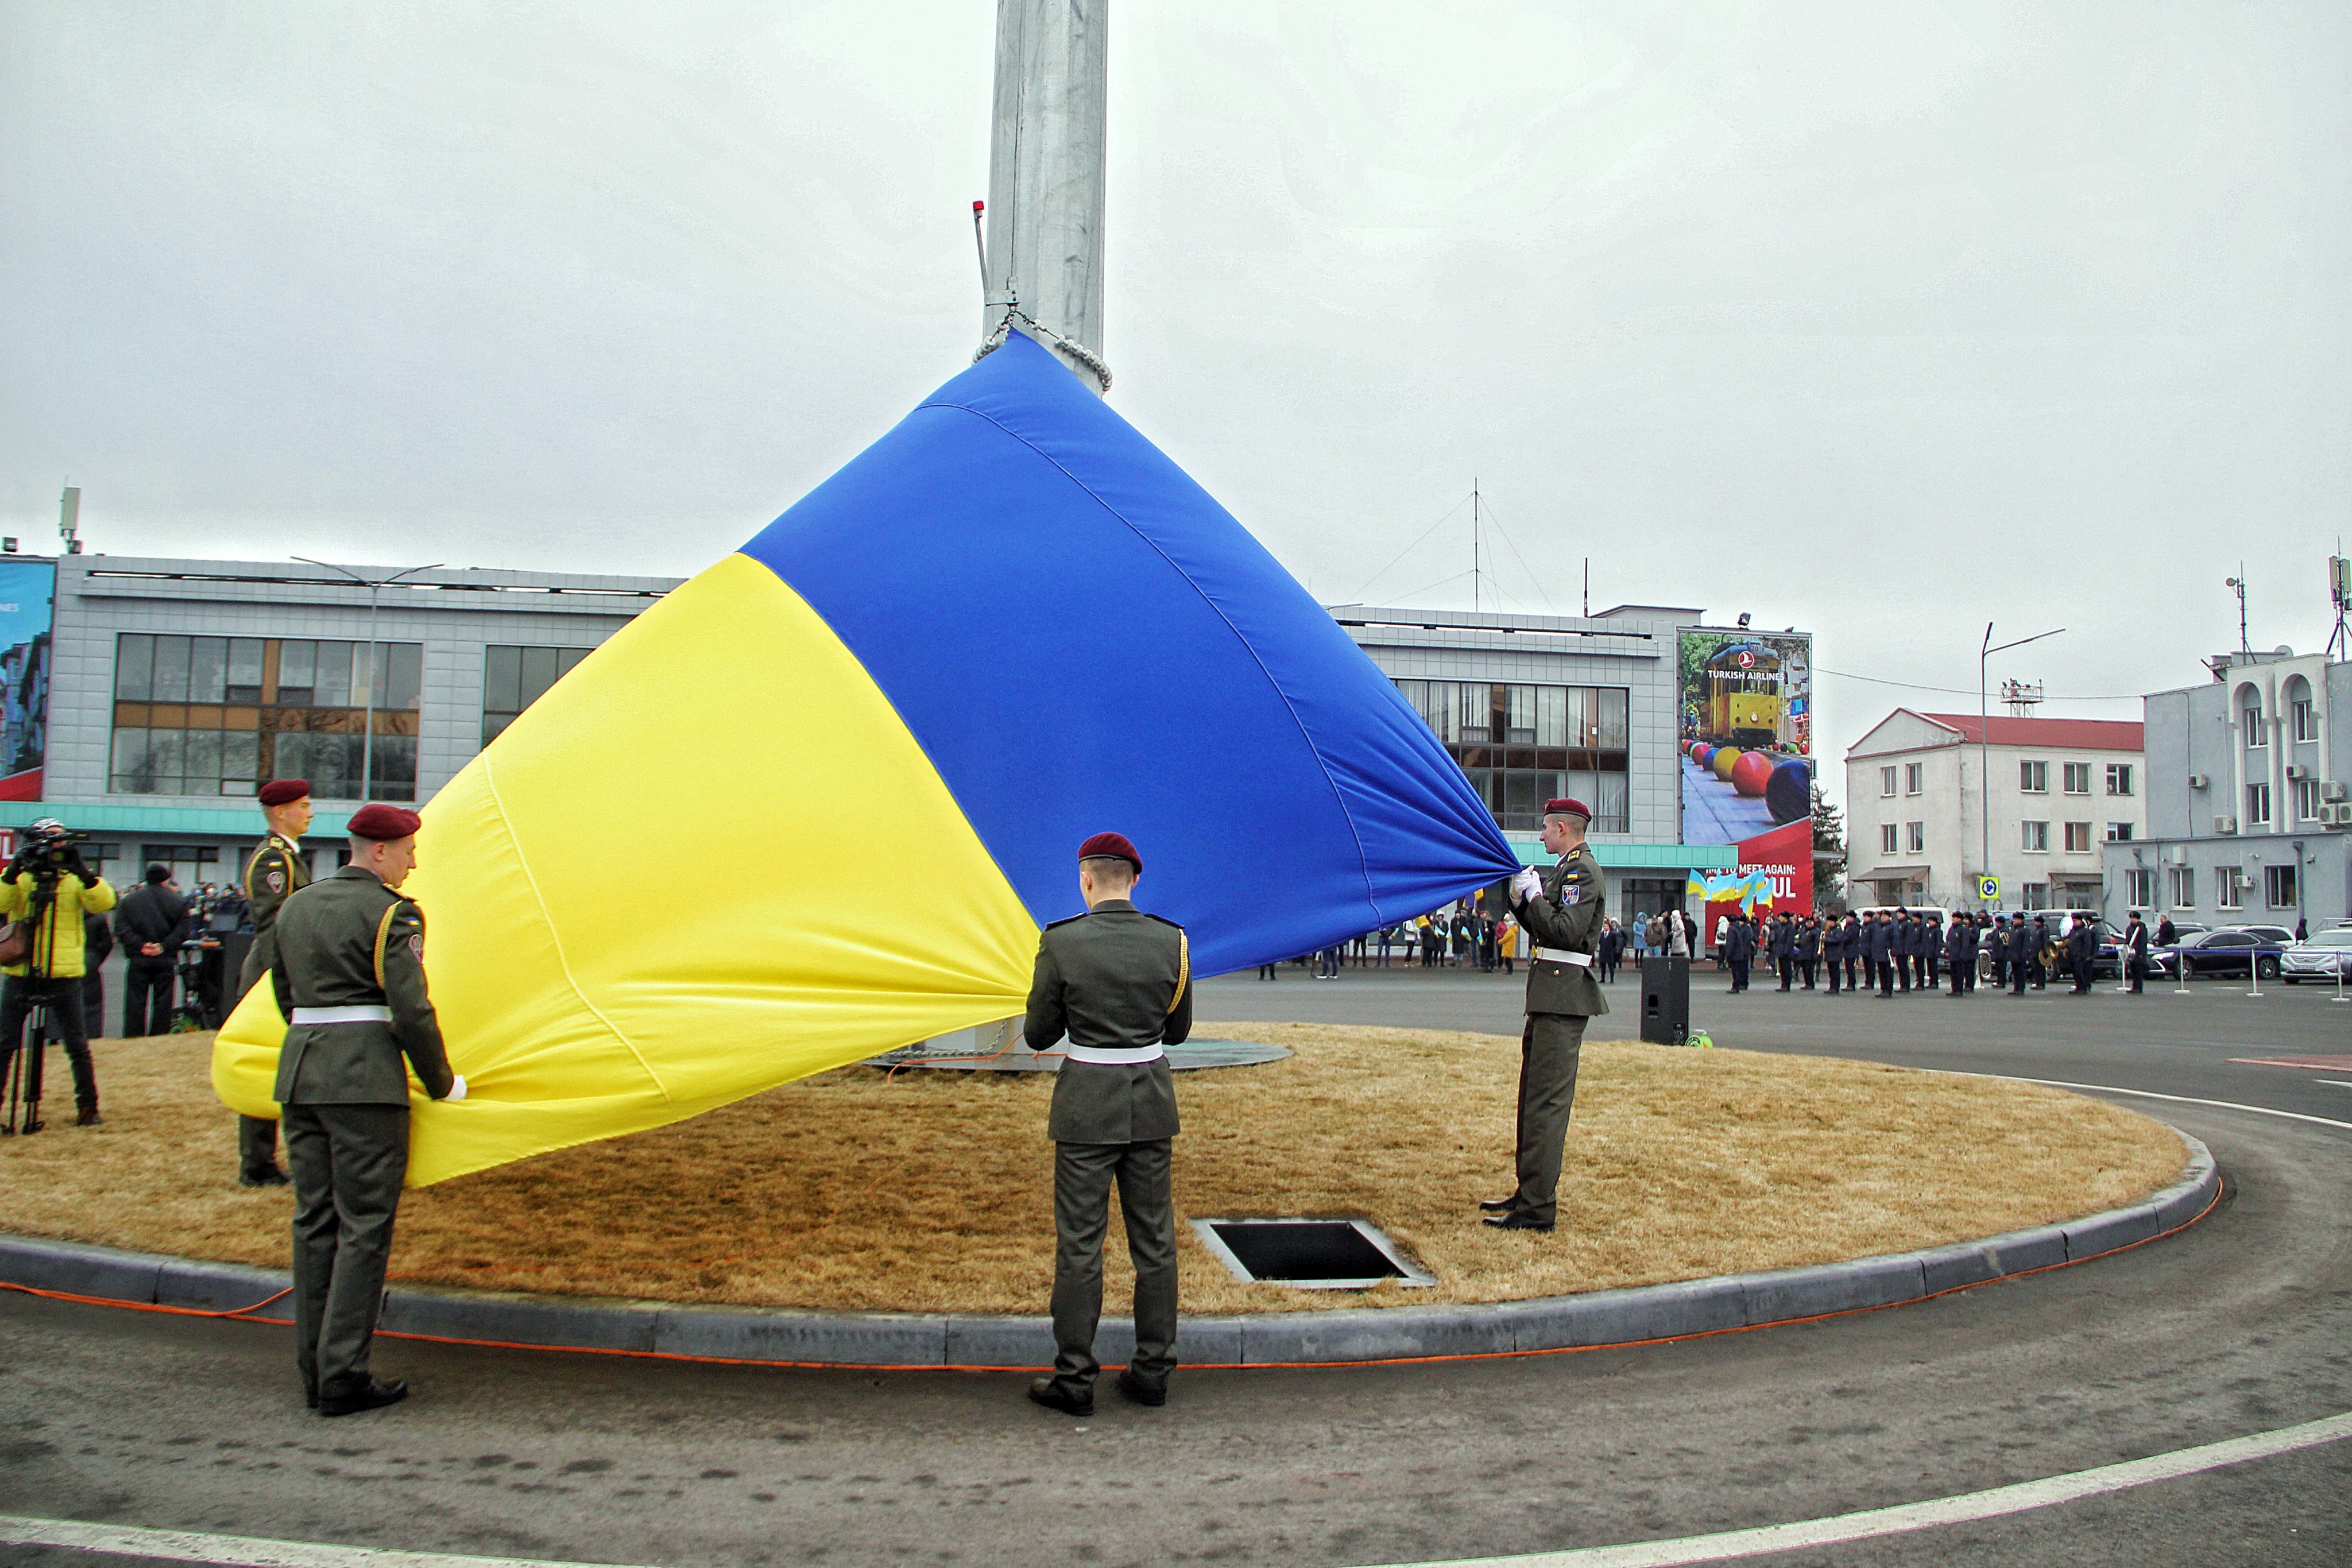 Raising of Ukrainian flag on Unity Day in Odesa